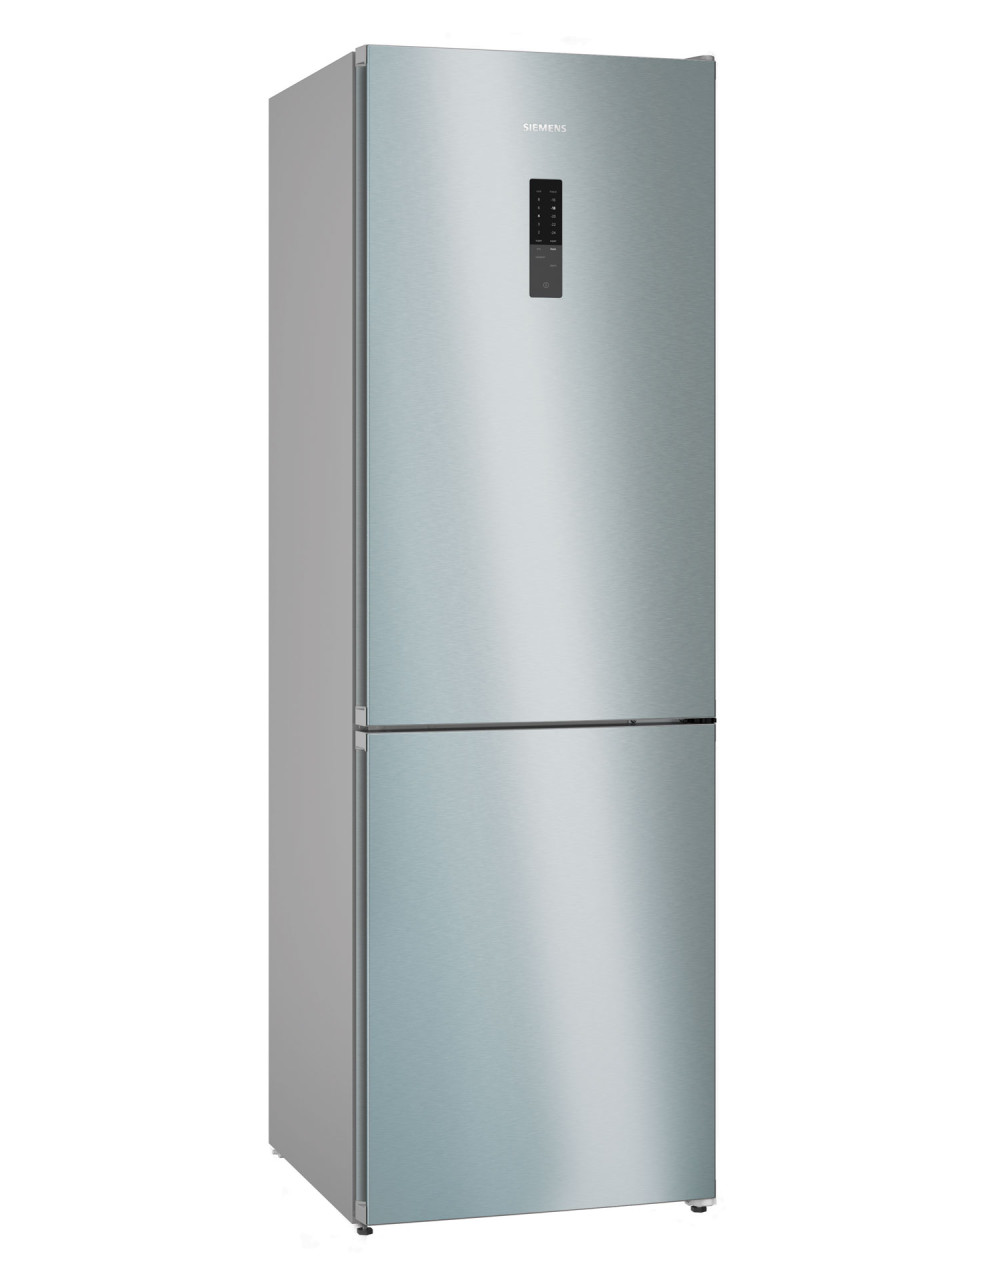 Siemens KG36NXIDF iQ300 Freestanding Fridge Freezer featured image